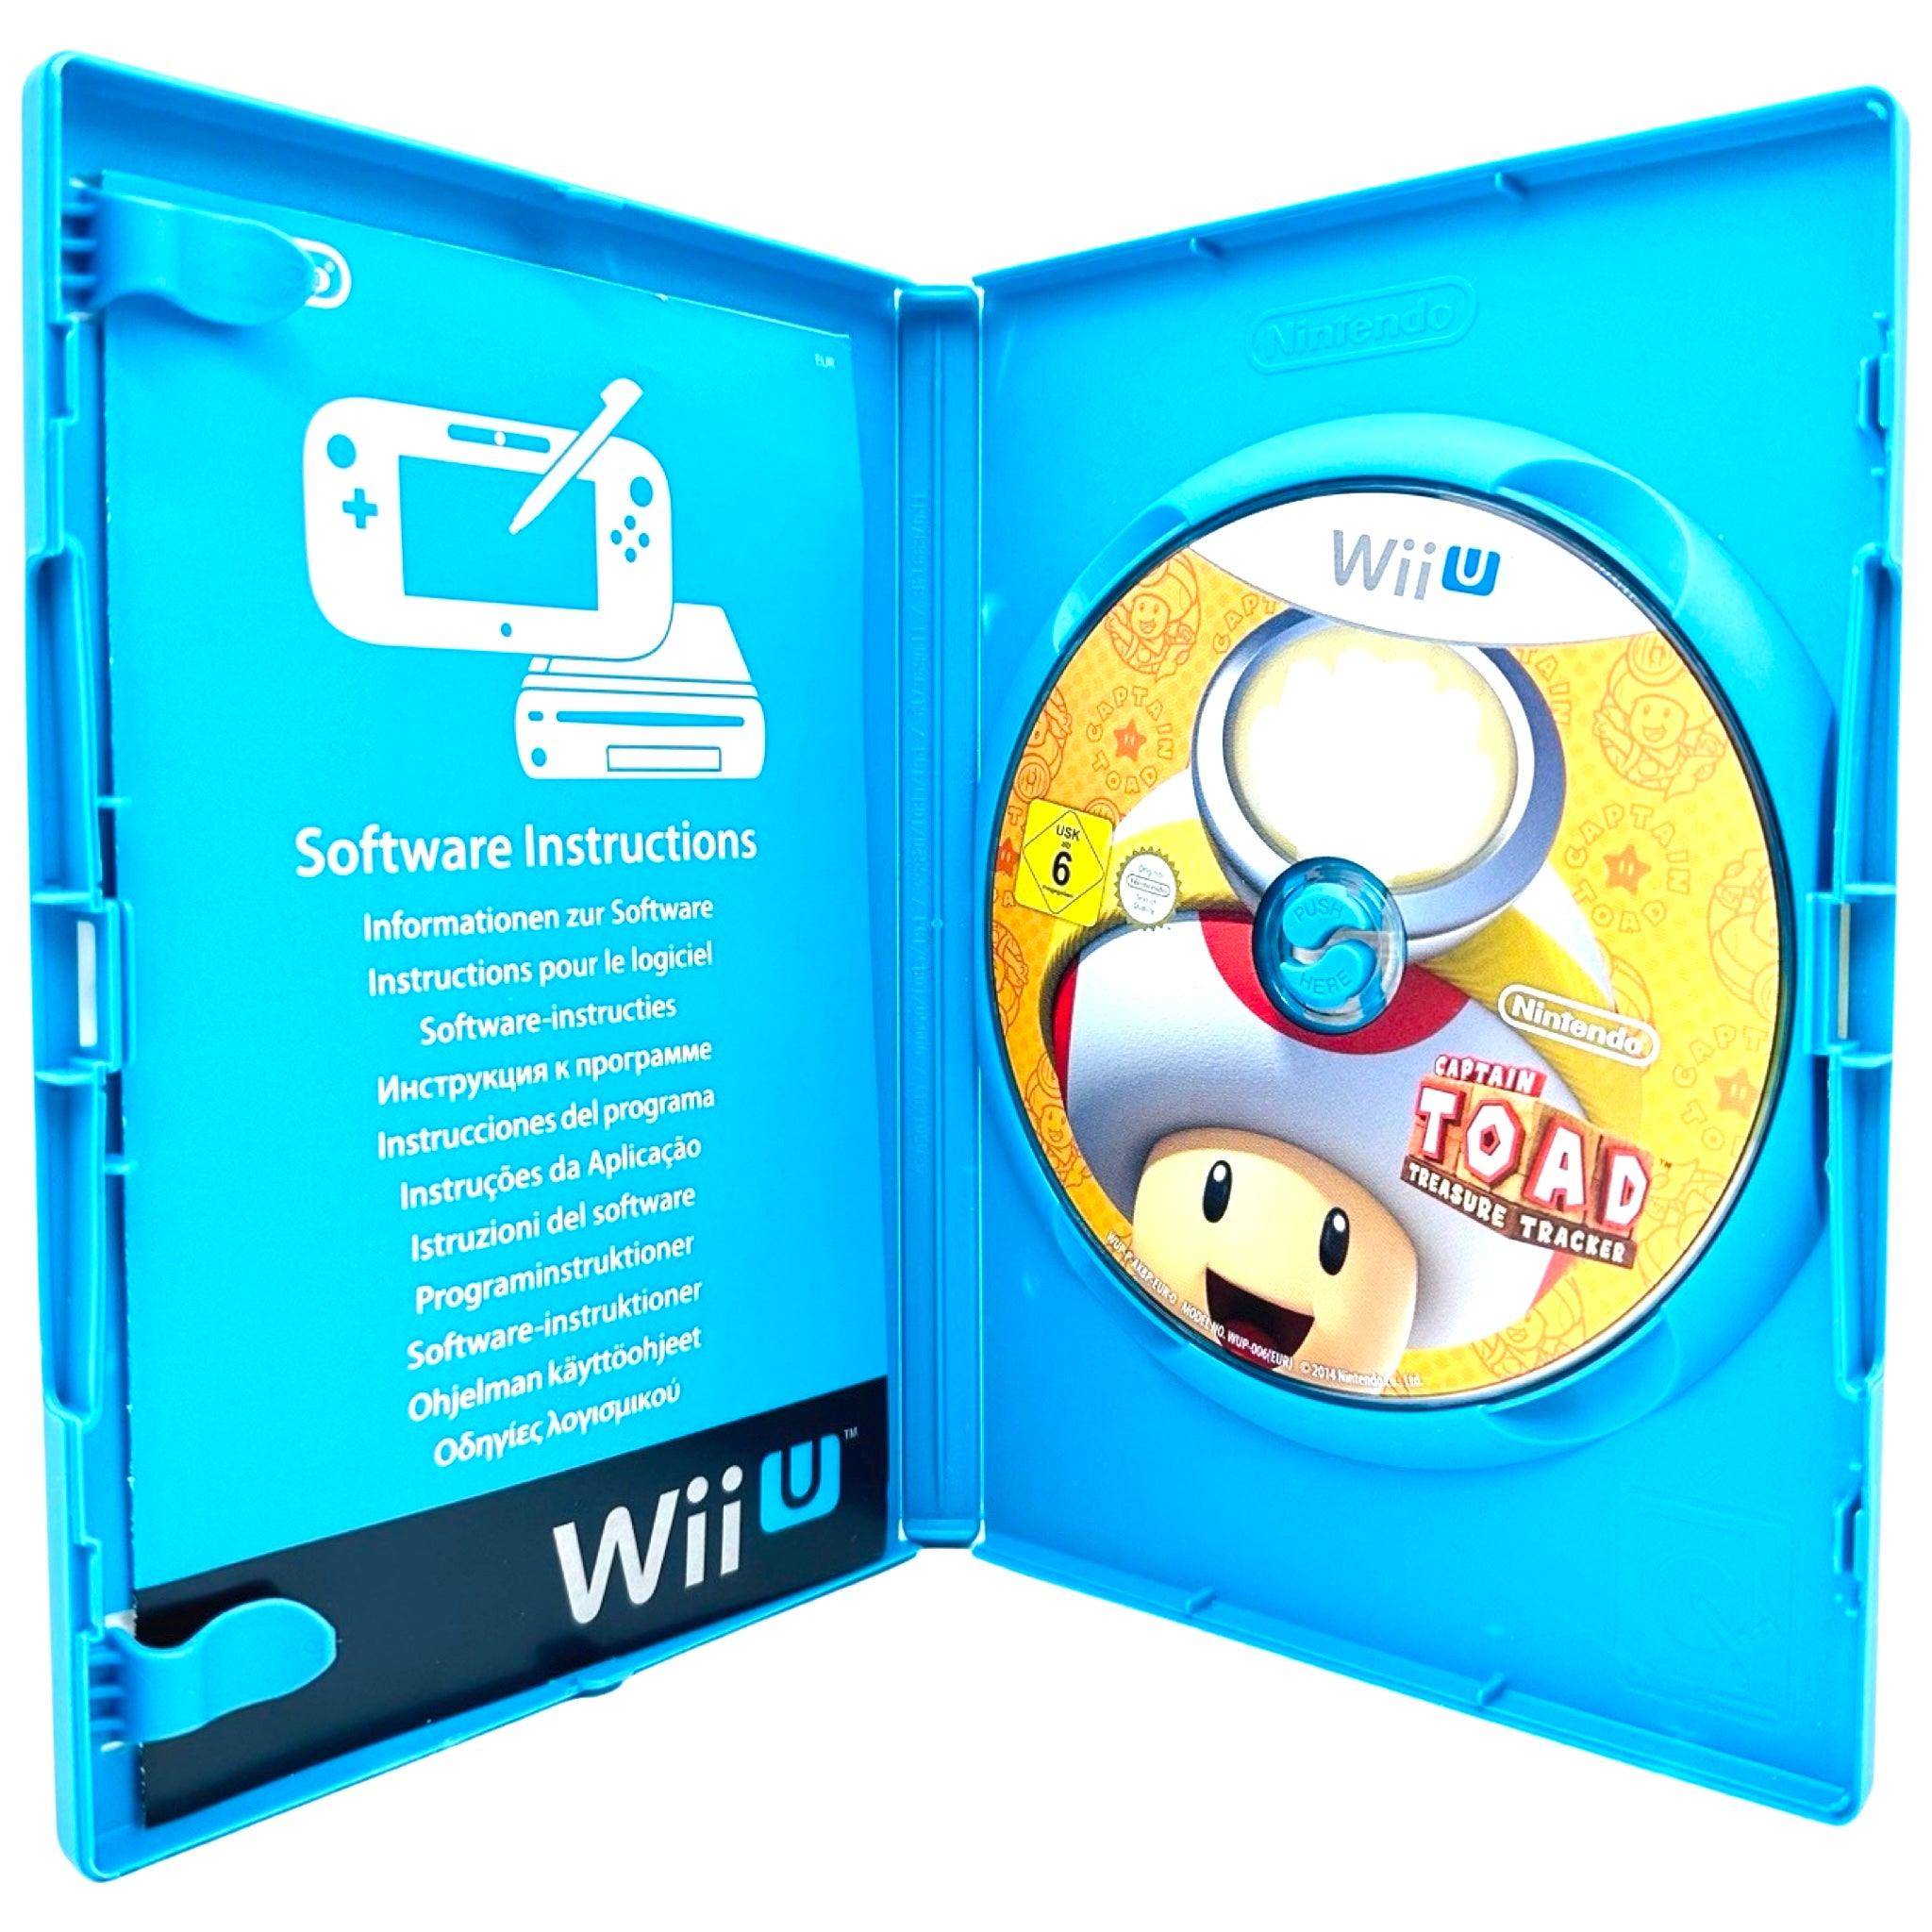 Wii U: Captain Toad: Treasure Tracker - RetroGaming.no